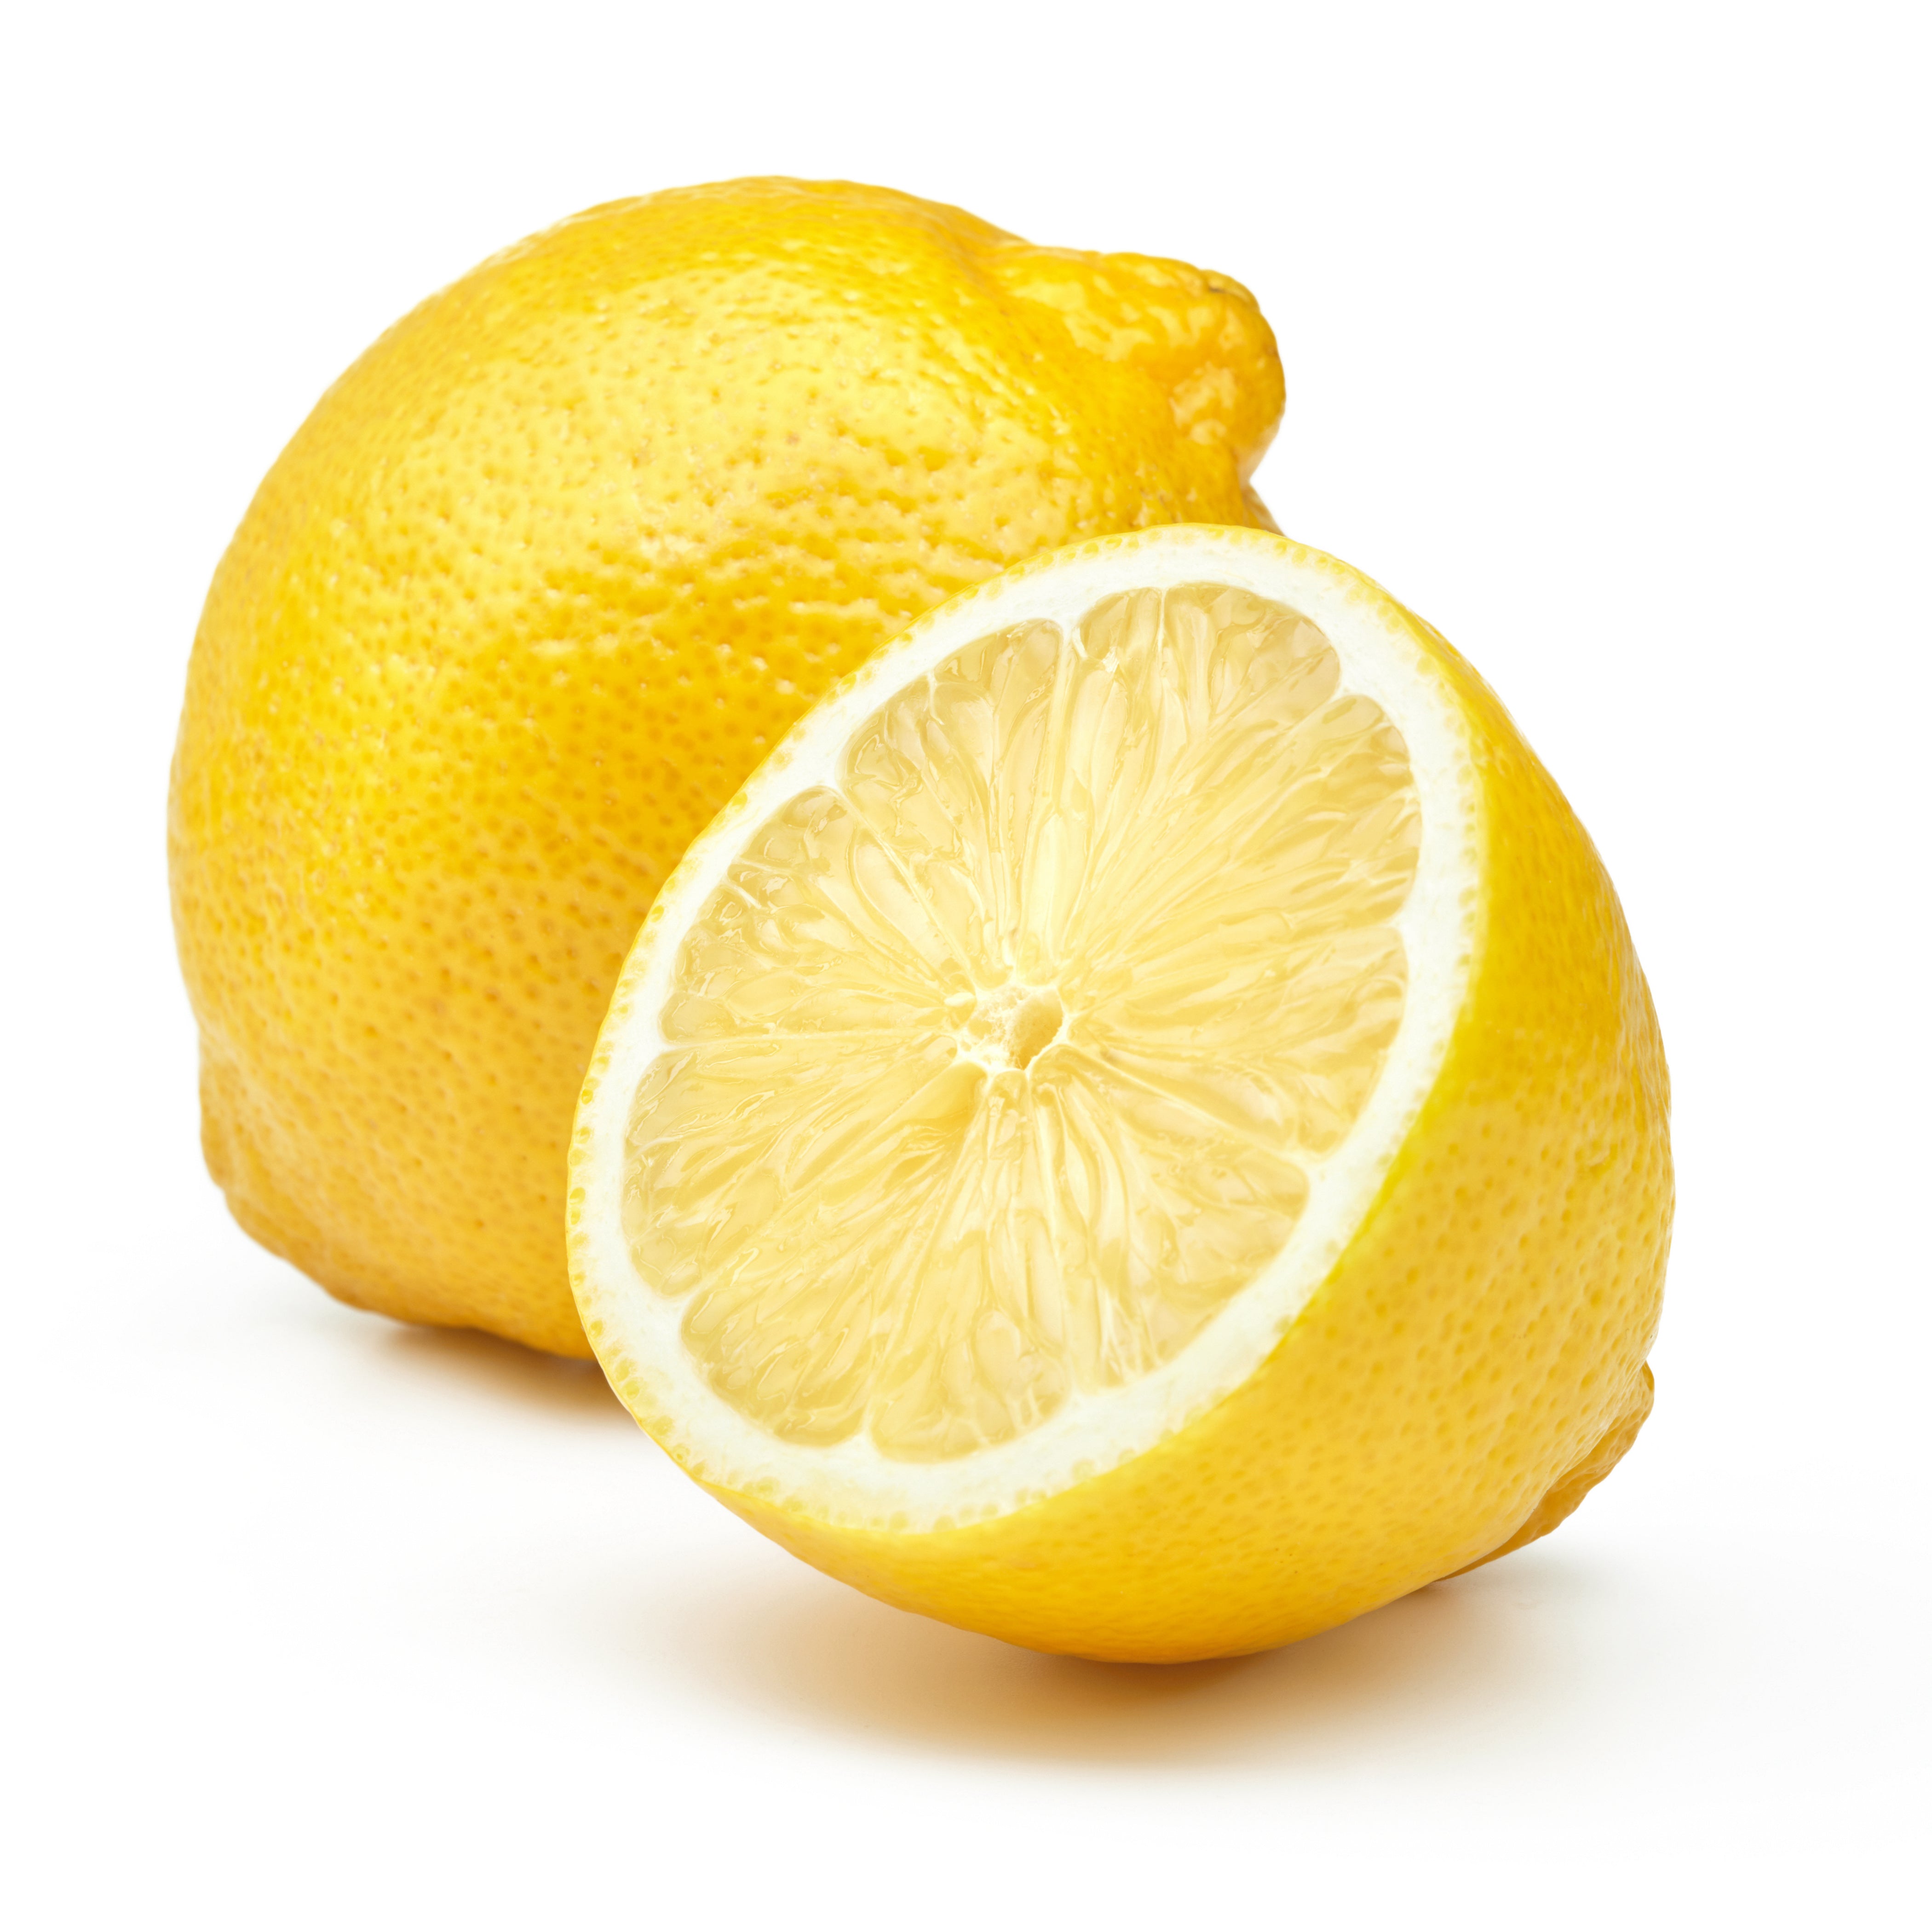 Lemon, whole and cut